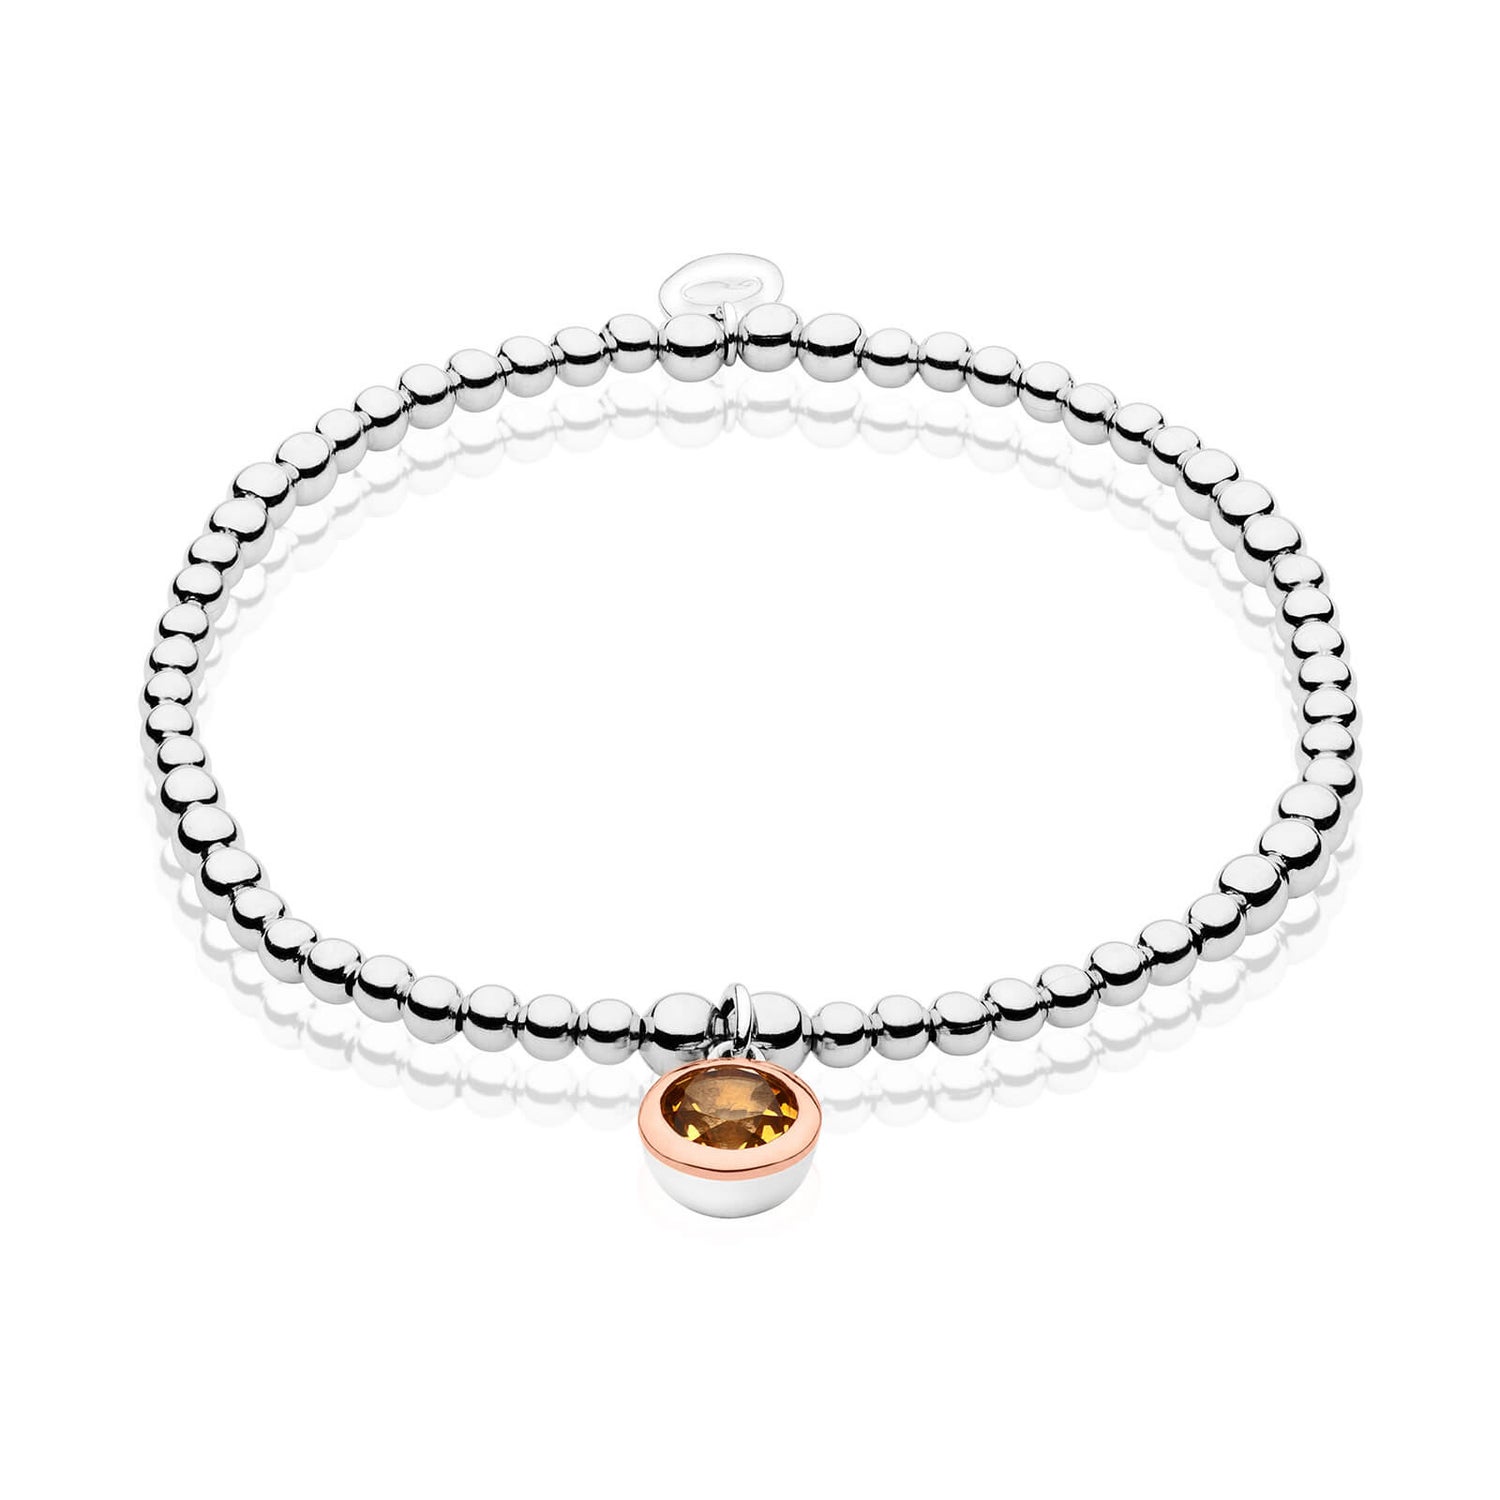 Pandora launches new birthstone collection  Latest Jewellery Trends   Pandora News